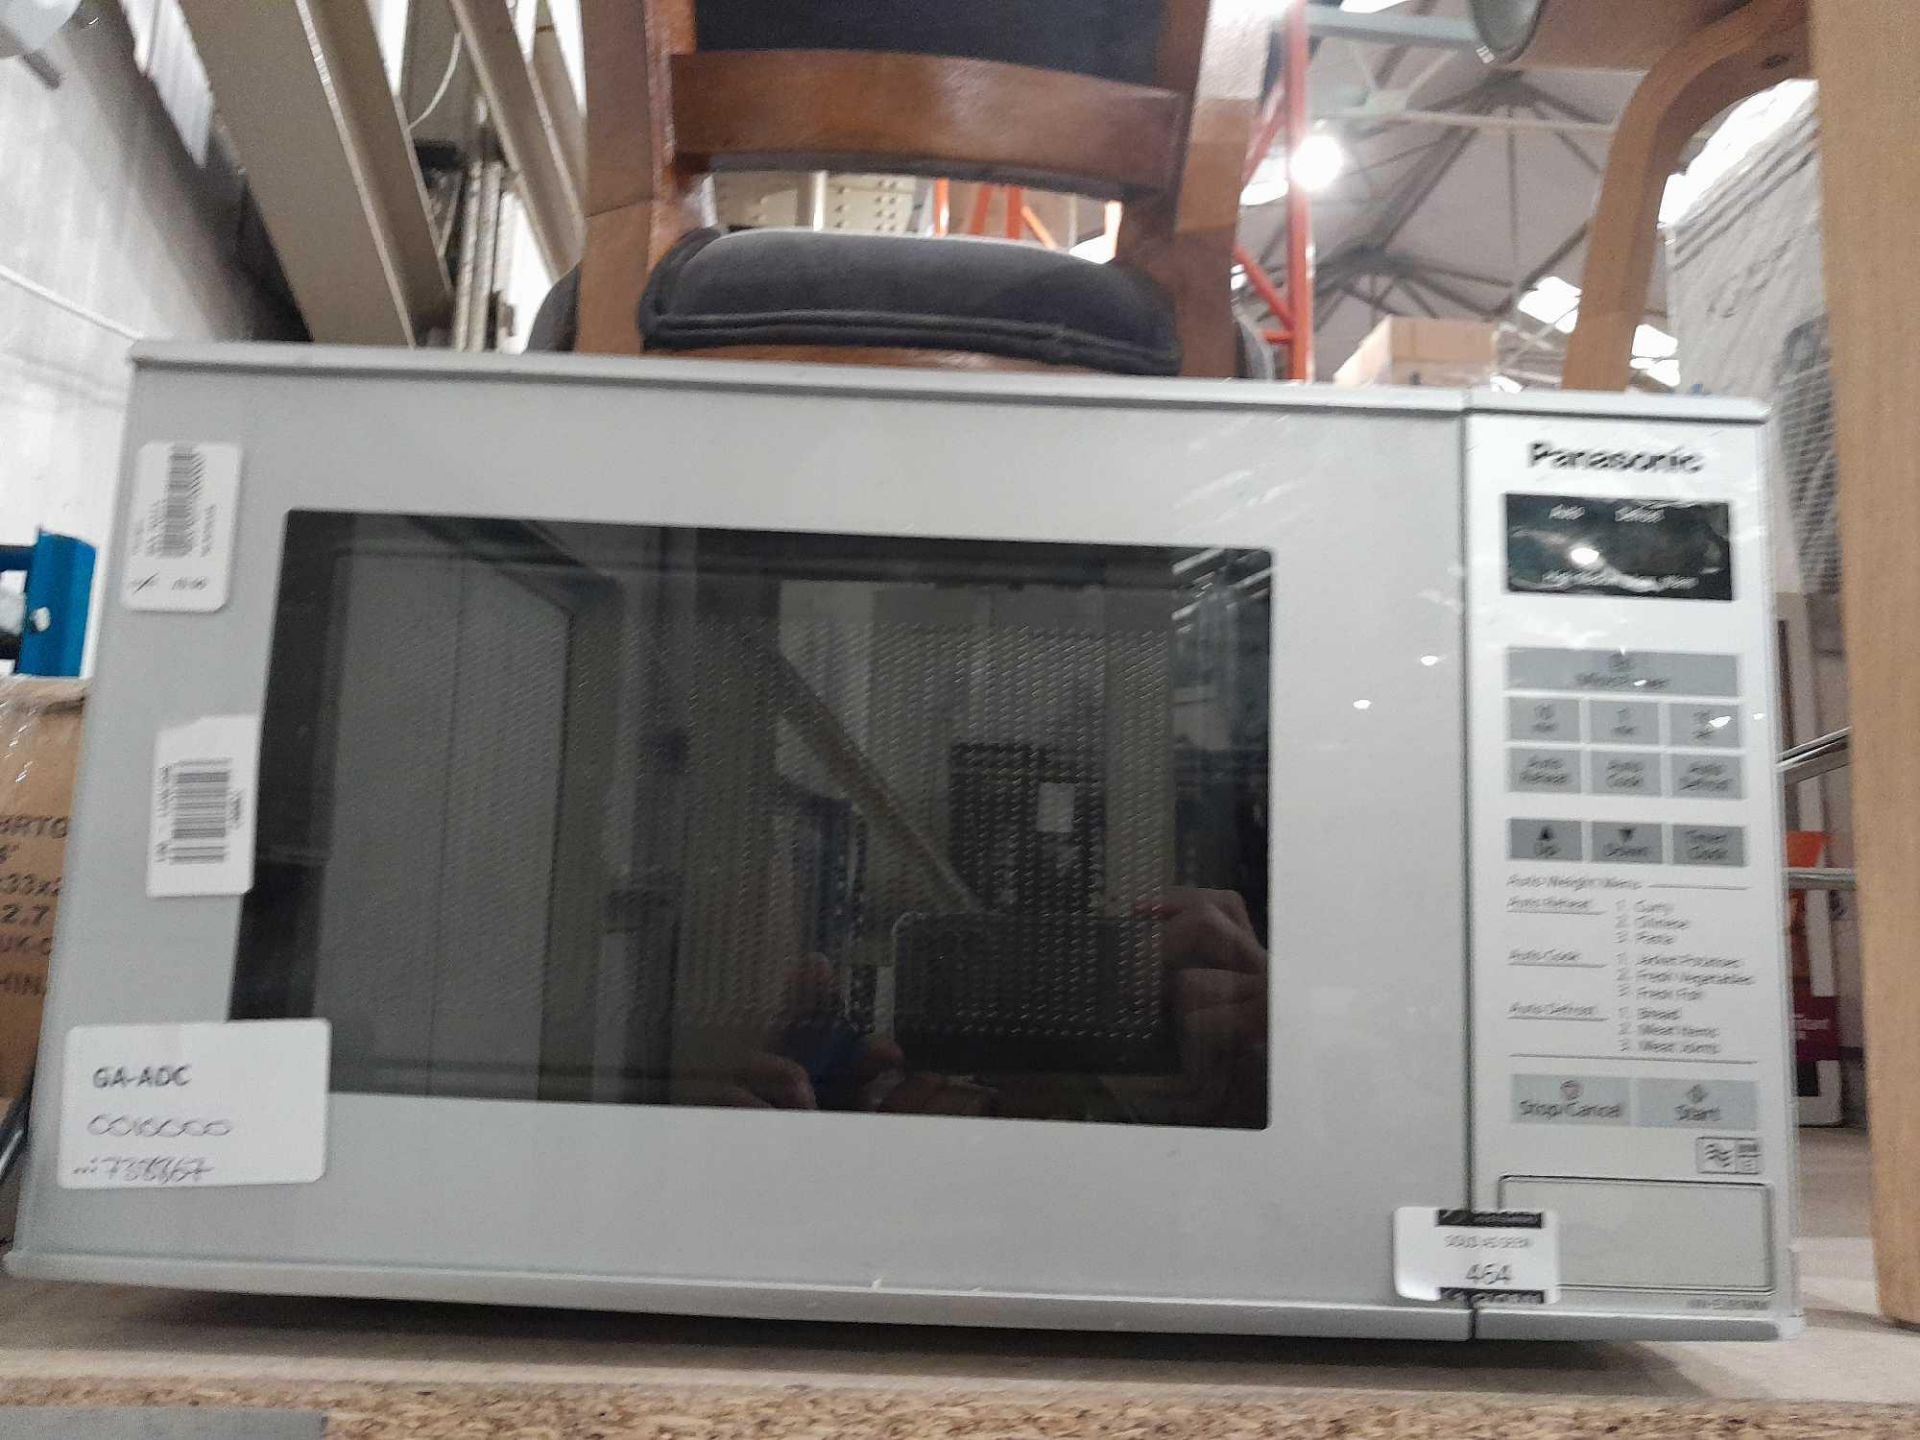 RRP £100 Panasonic Nn-E281Mm Microwave - Image 2 of 2